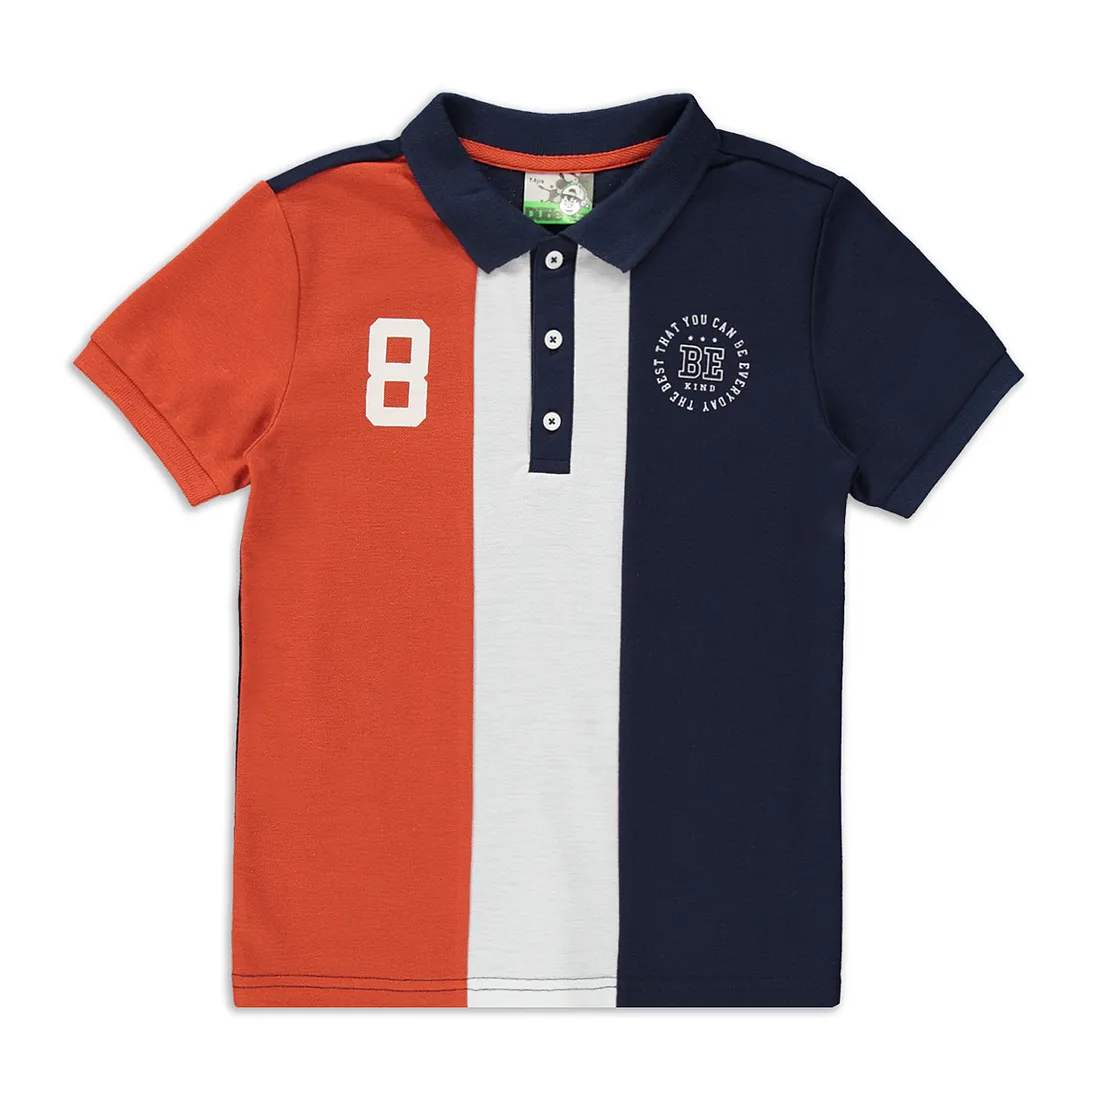 Colourblock golfer rust, white & navy - BOYS 2-8 YEARS Tops & T-Shirts ...